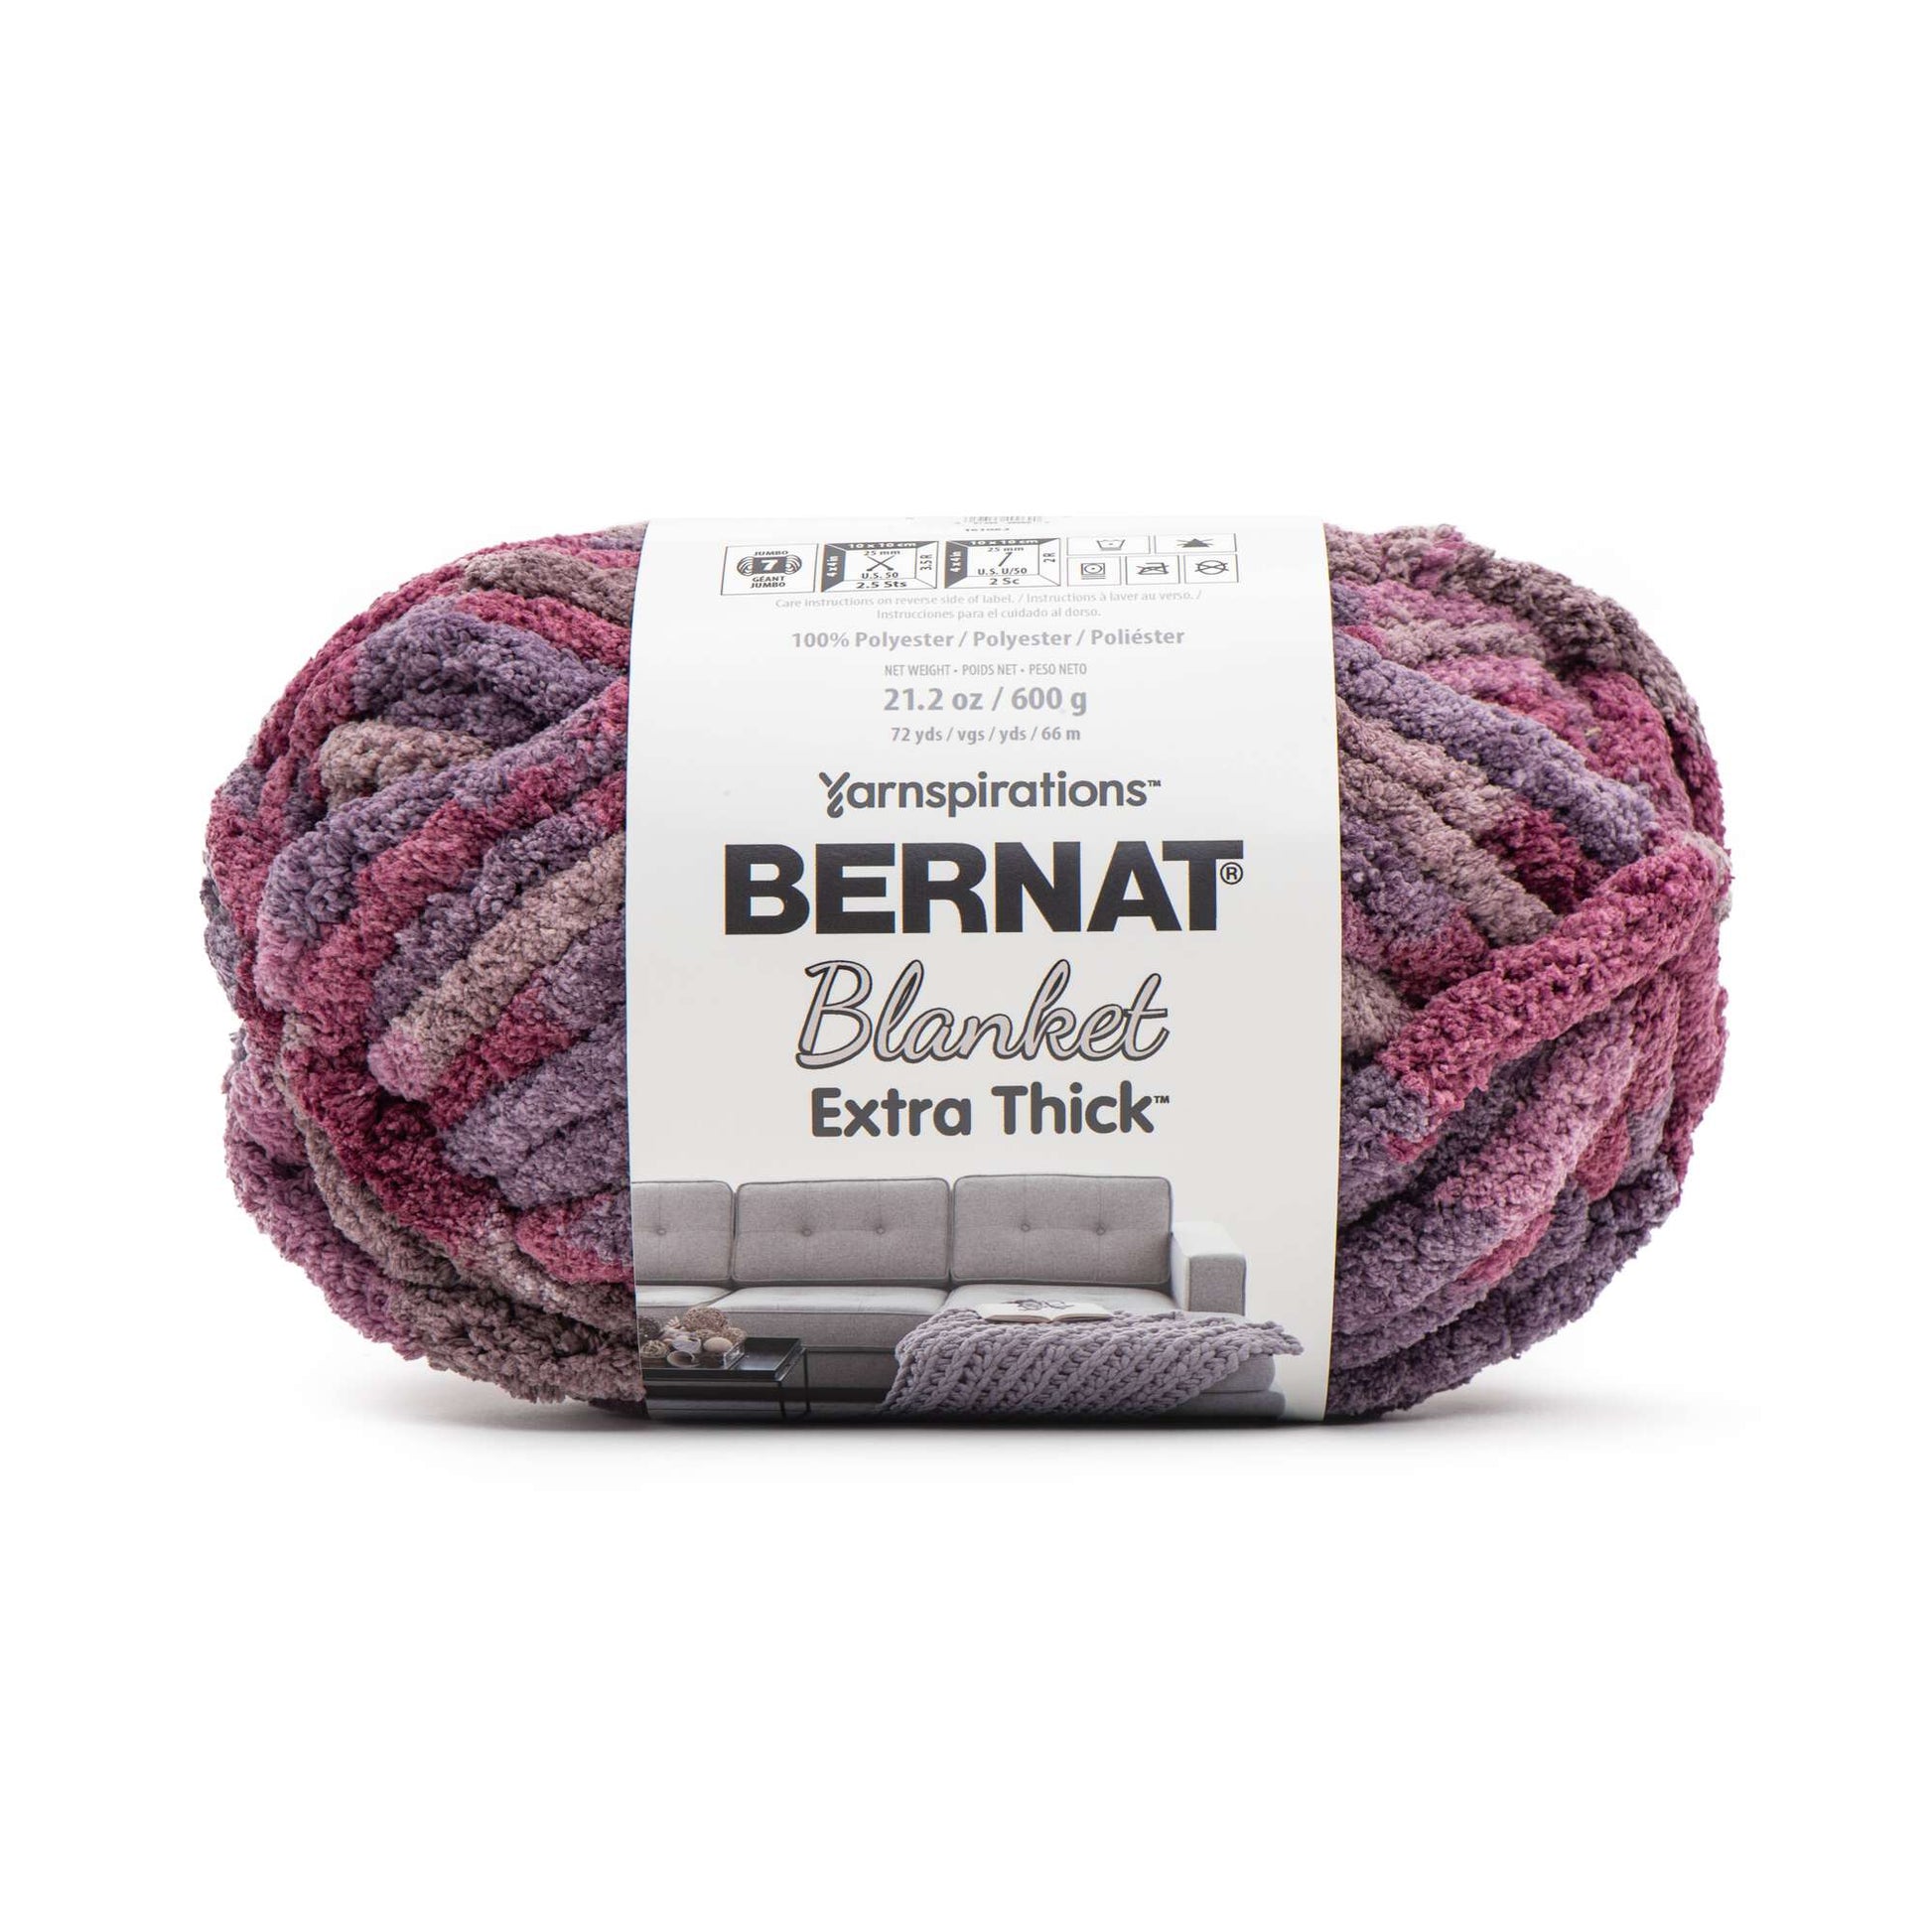 Bernat Blanket Extra Thick Yarn (600g/21.2oz) - Discontinued Shades Dusk